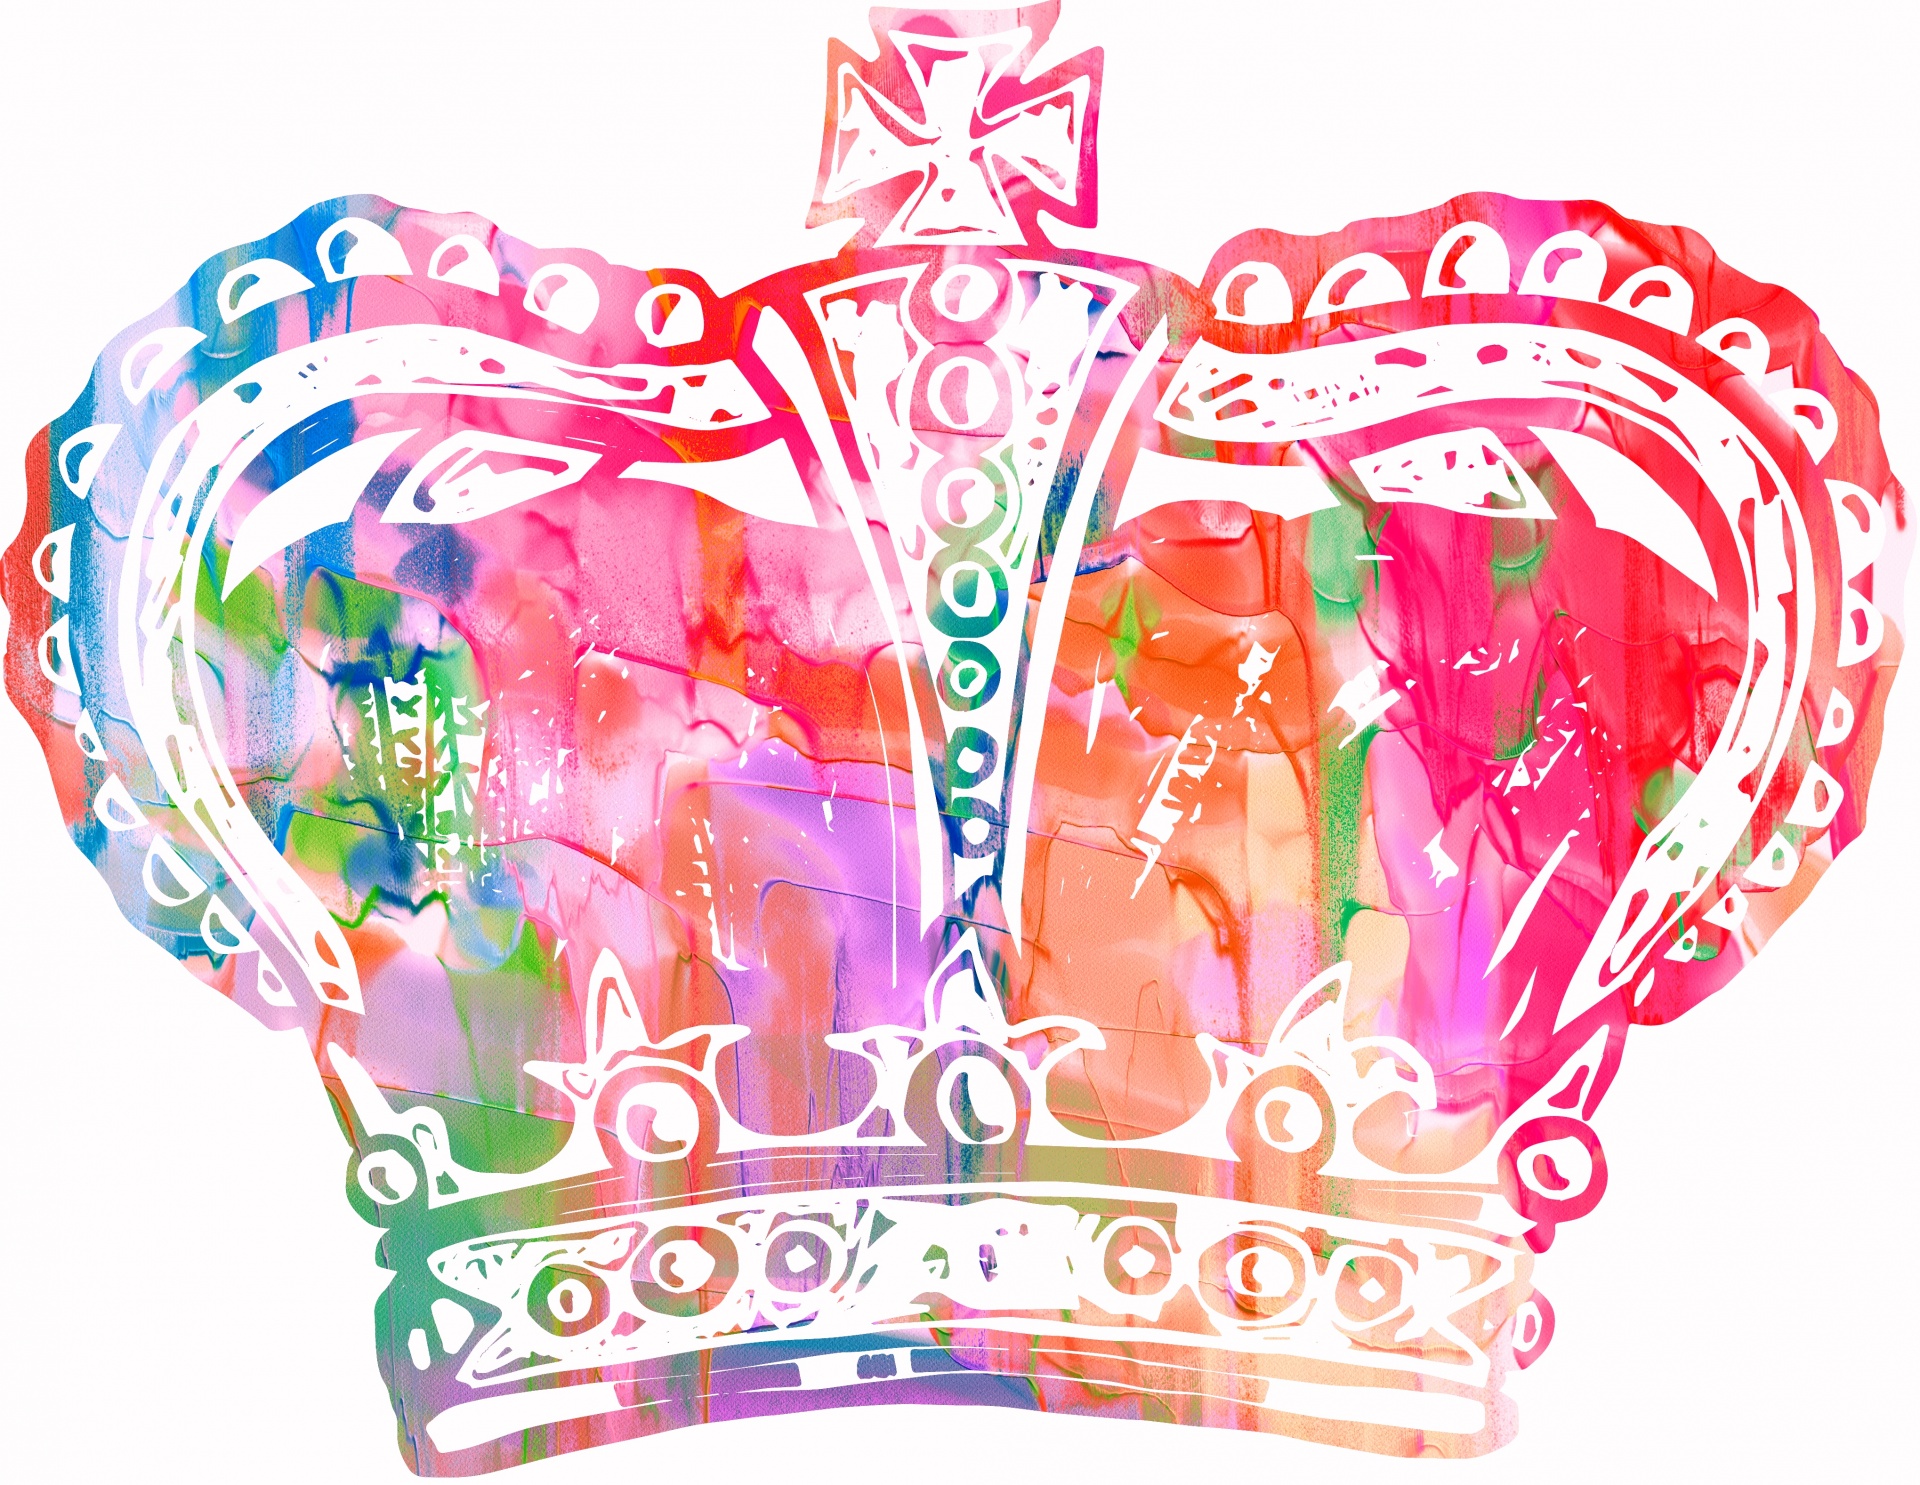 Royal Crown